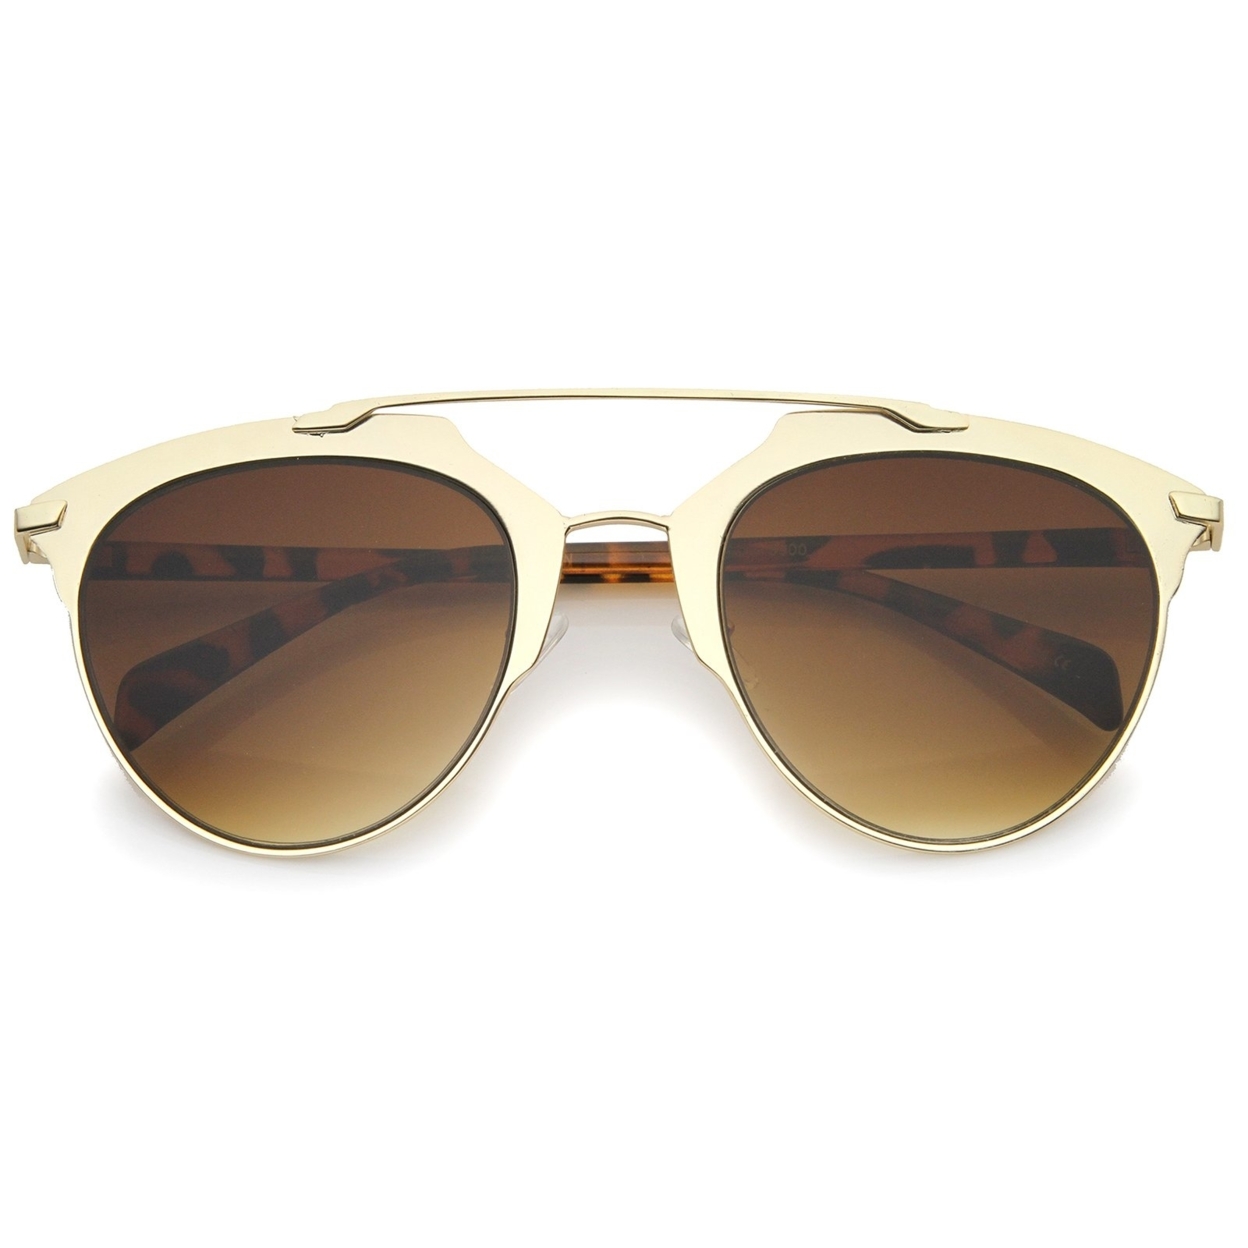 Modern Fashion Matte Metal Frame Double Bridge Pantos Aviator Sunglasses 55mm - Matte Gold-Tortoise / Amber